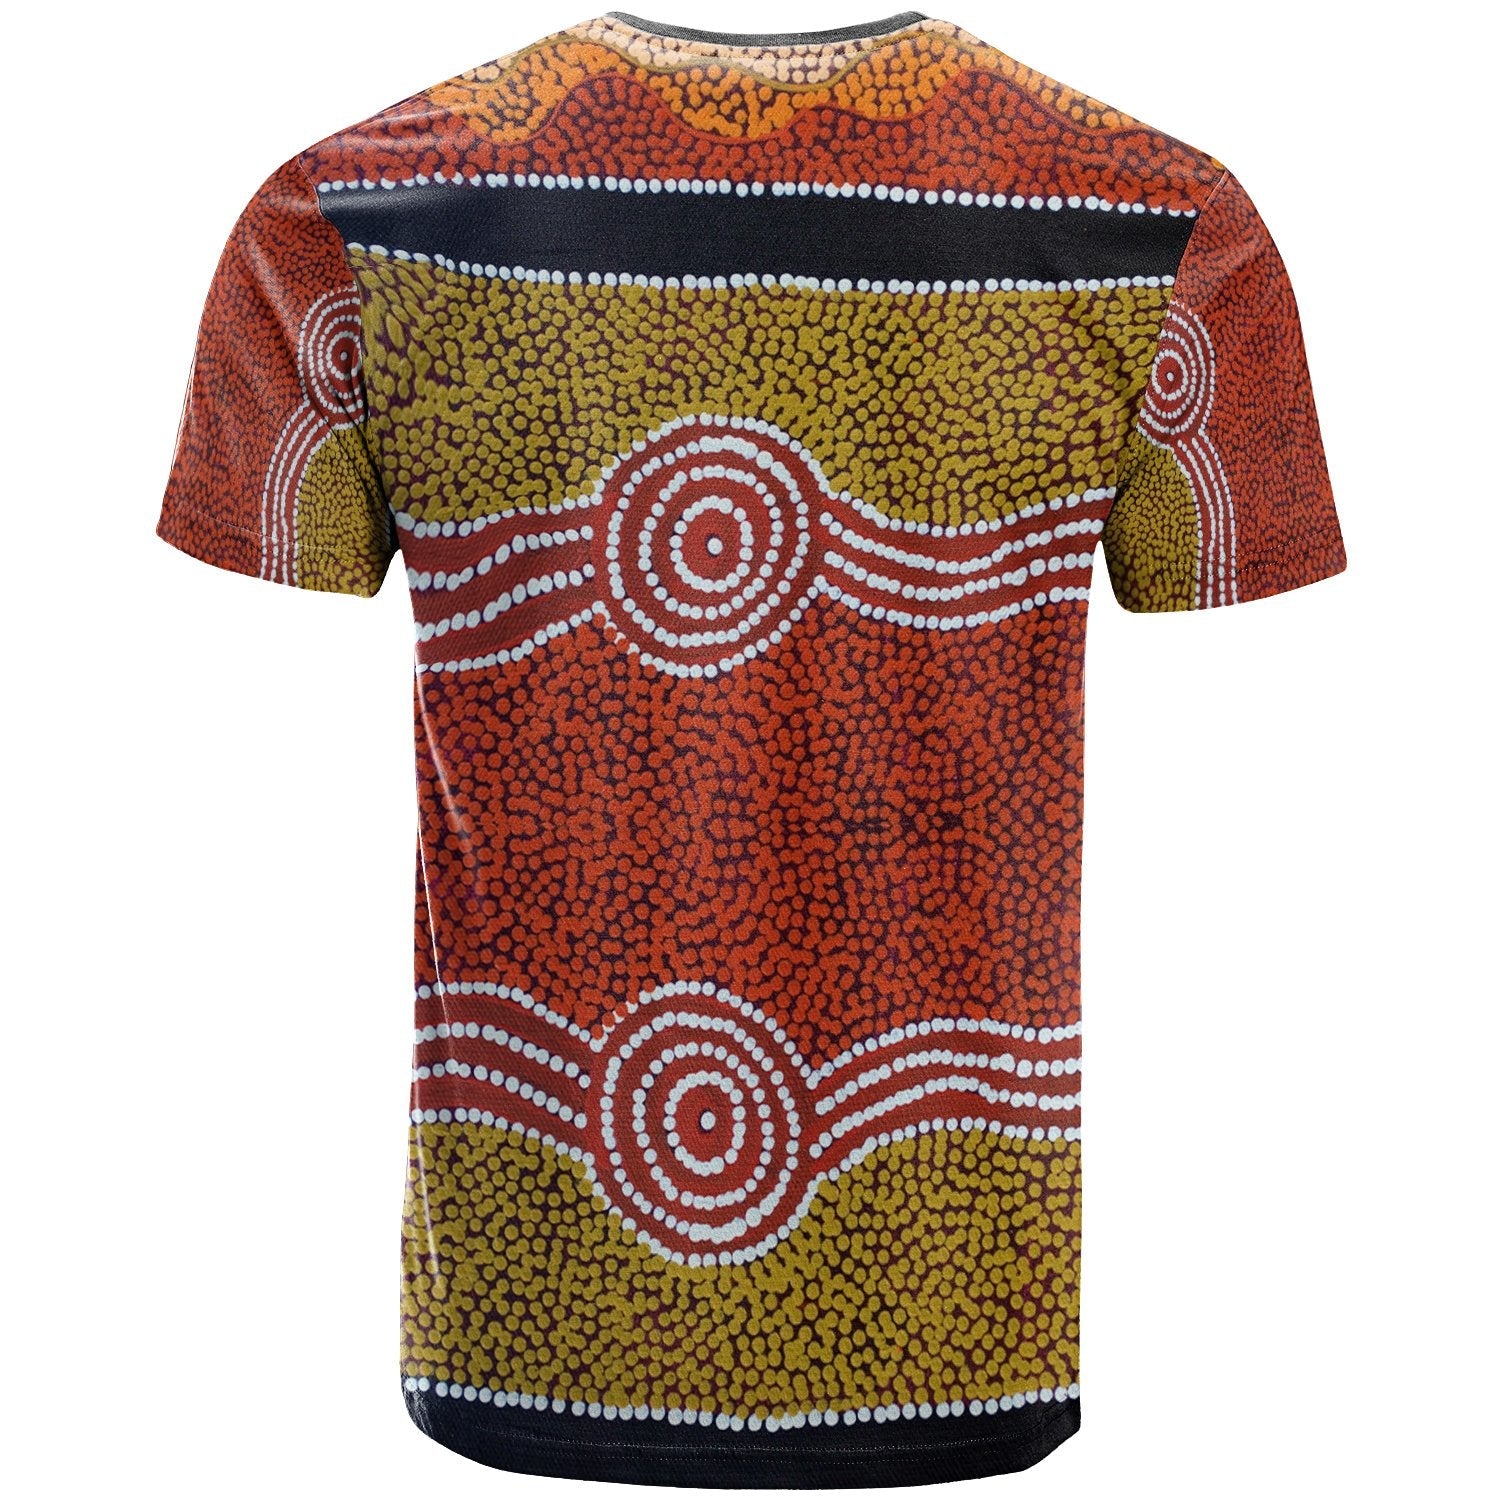 tshirt-aboriginal-dot-style